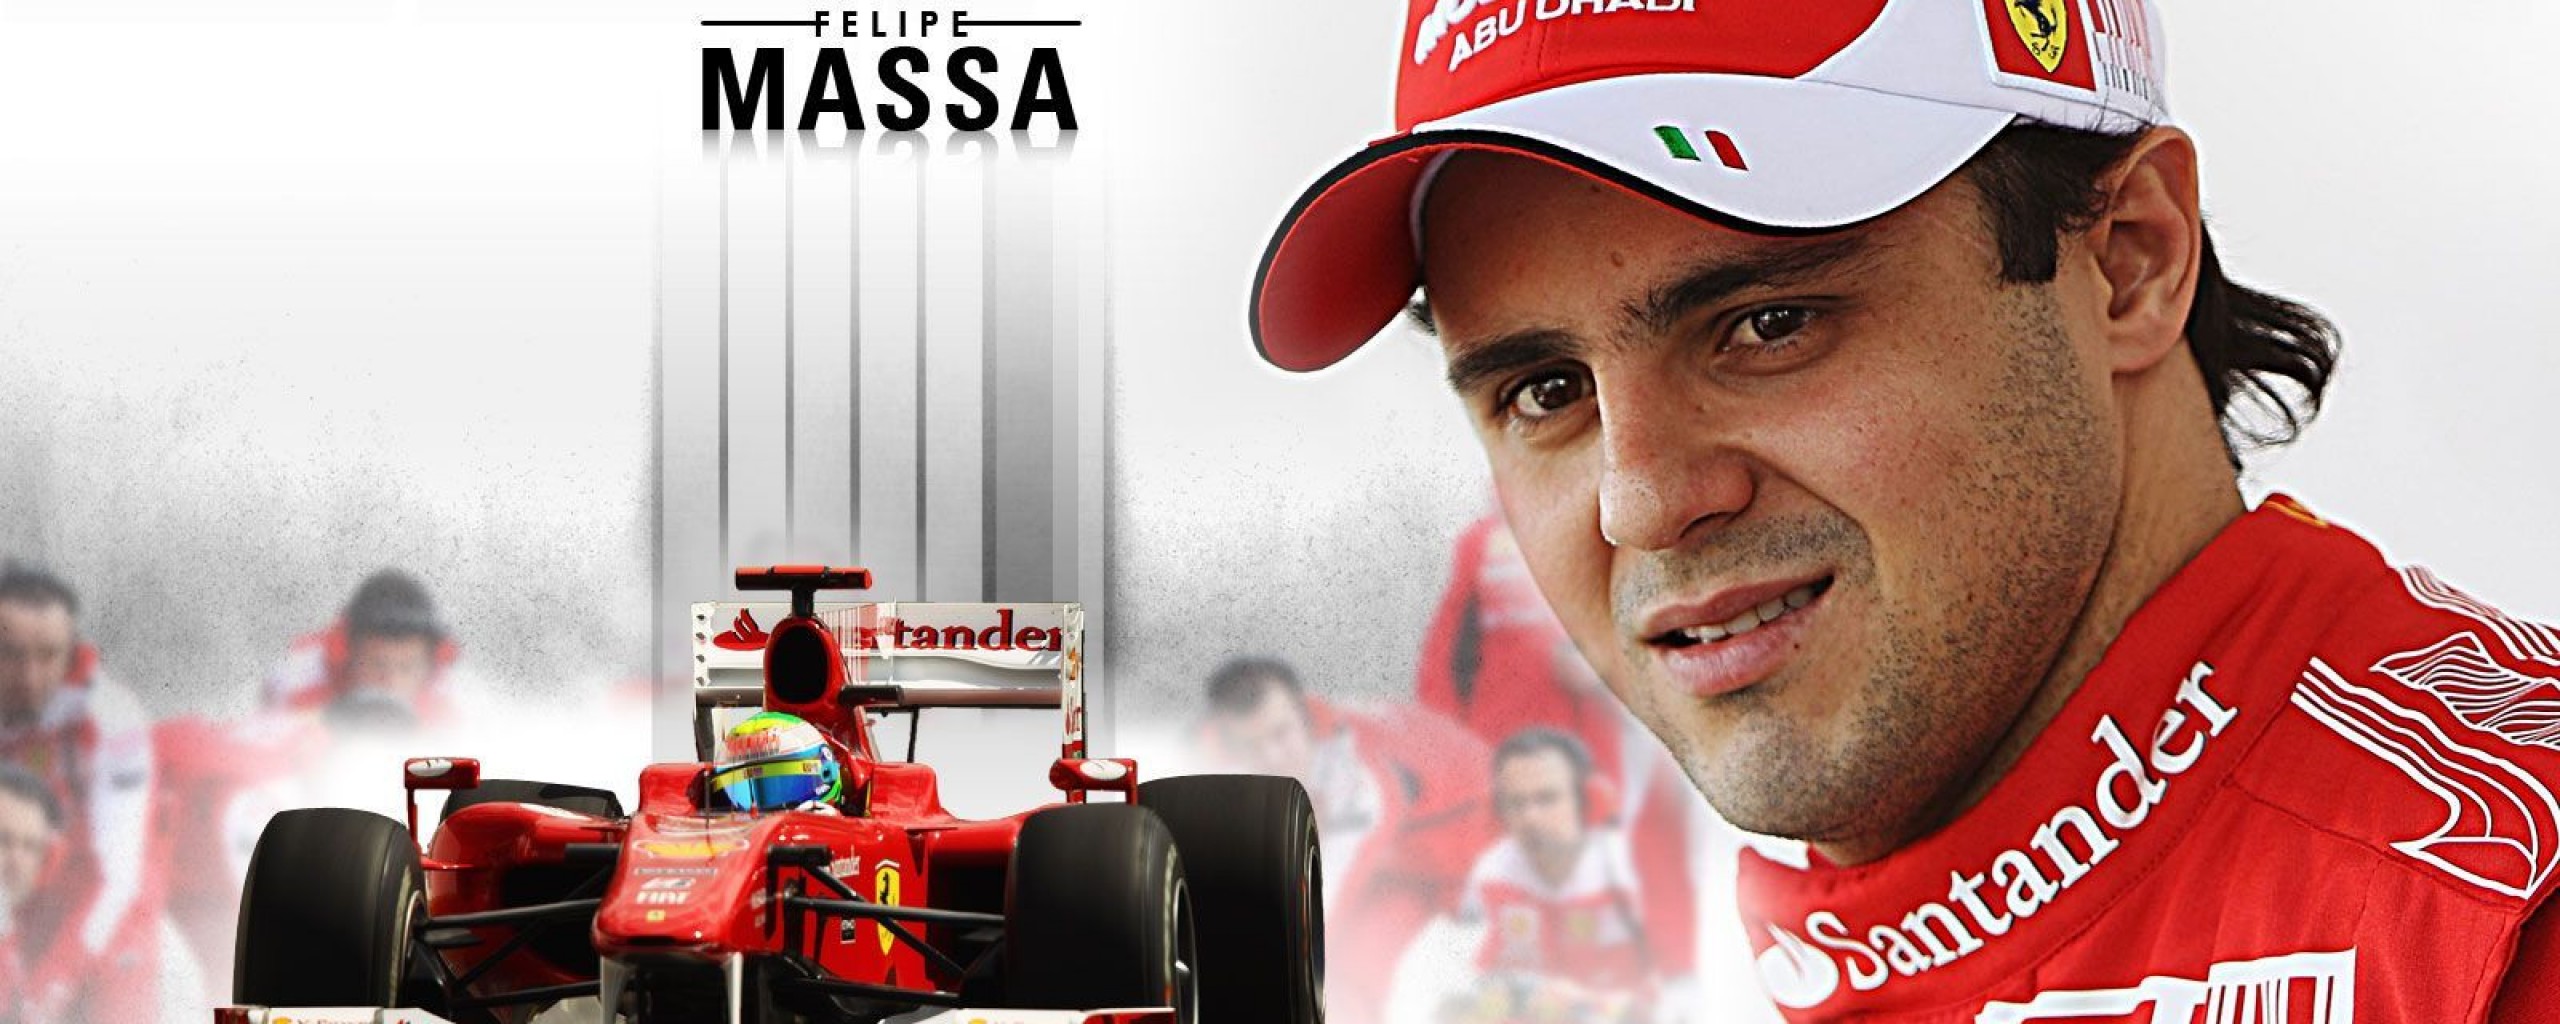 Felipe Massa HD Racing Wallpaper1